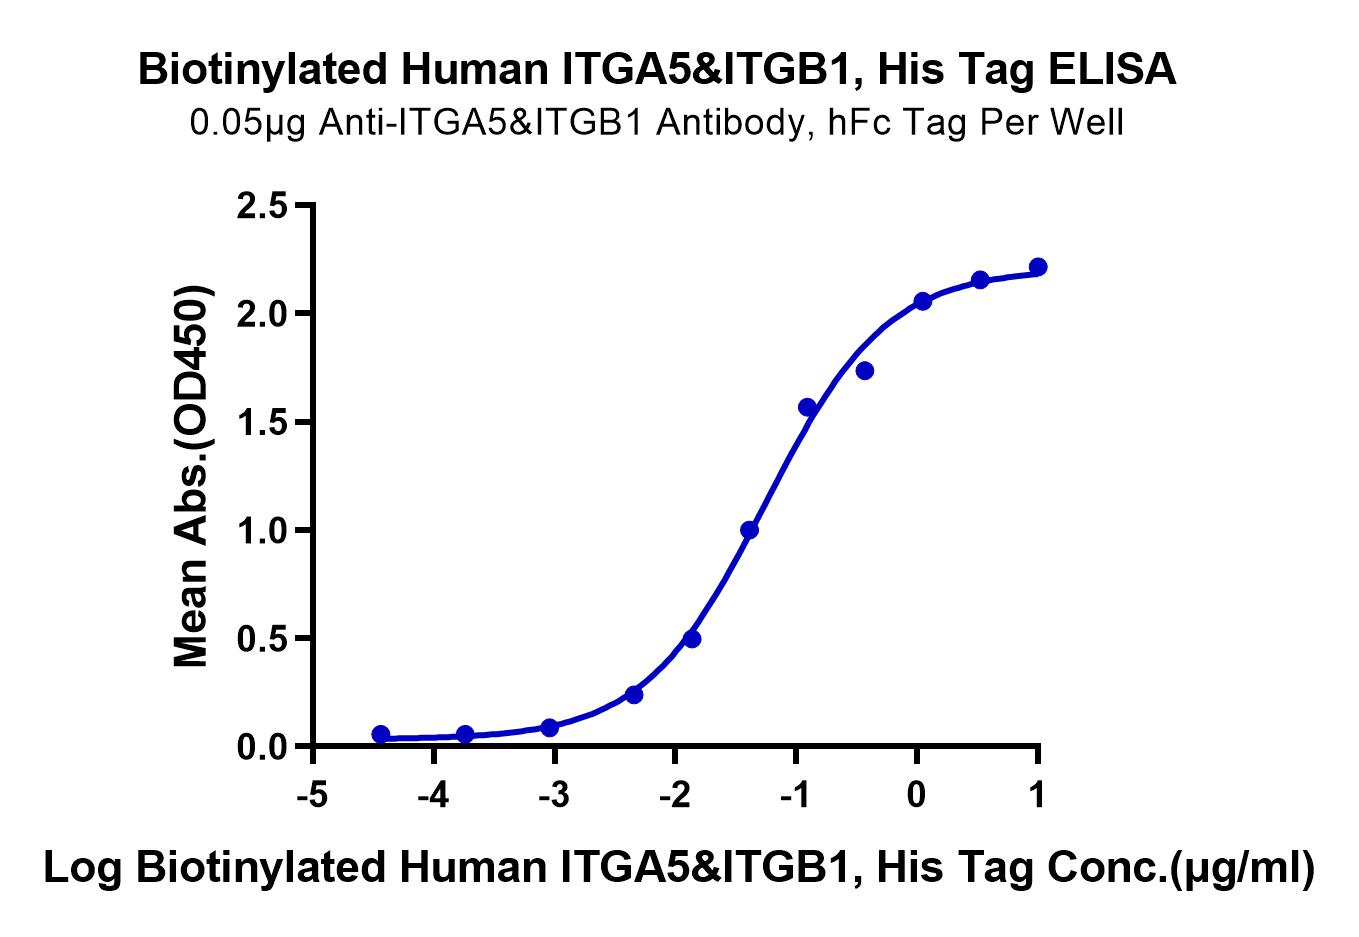 Biotinylated Human Integrin alpha 5 beta 1 (ITGA5&ITGB1) Heterodimer Protein (LTP10086)